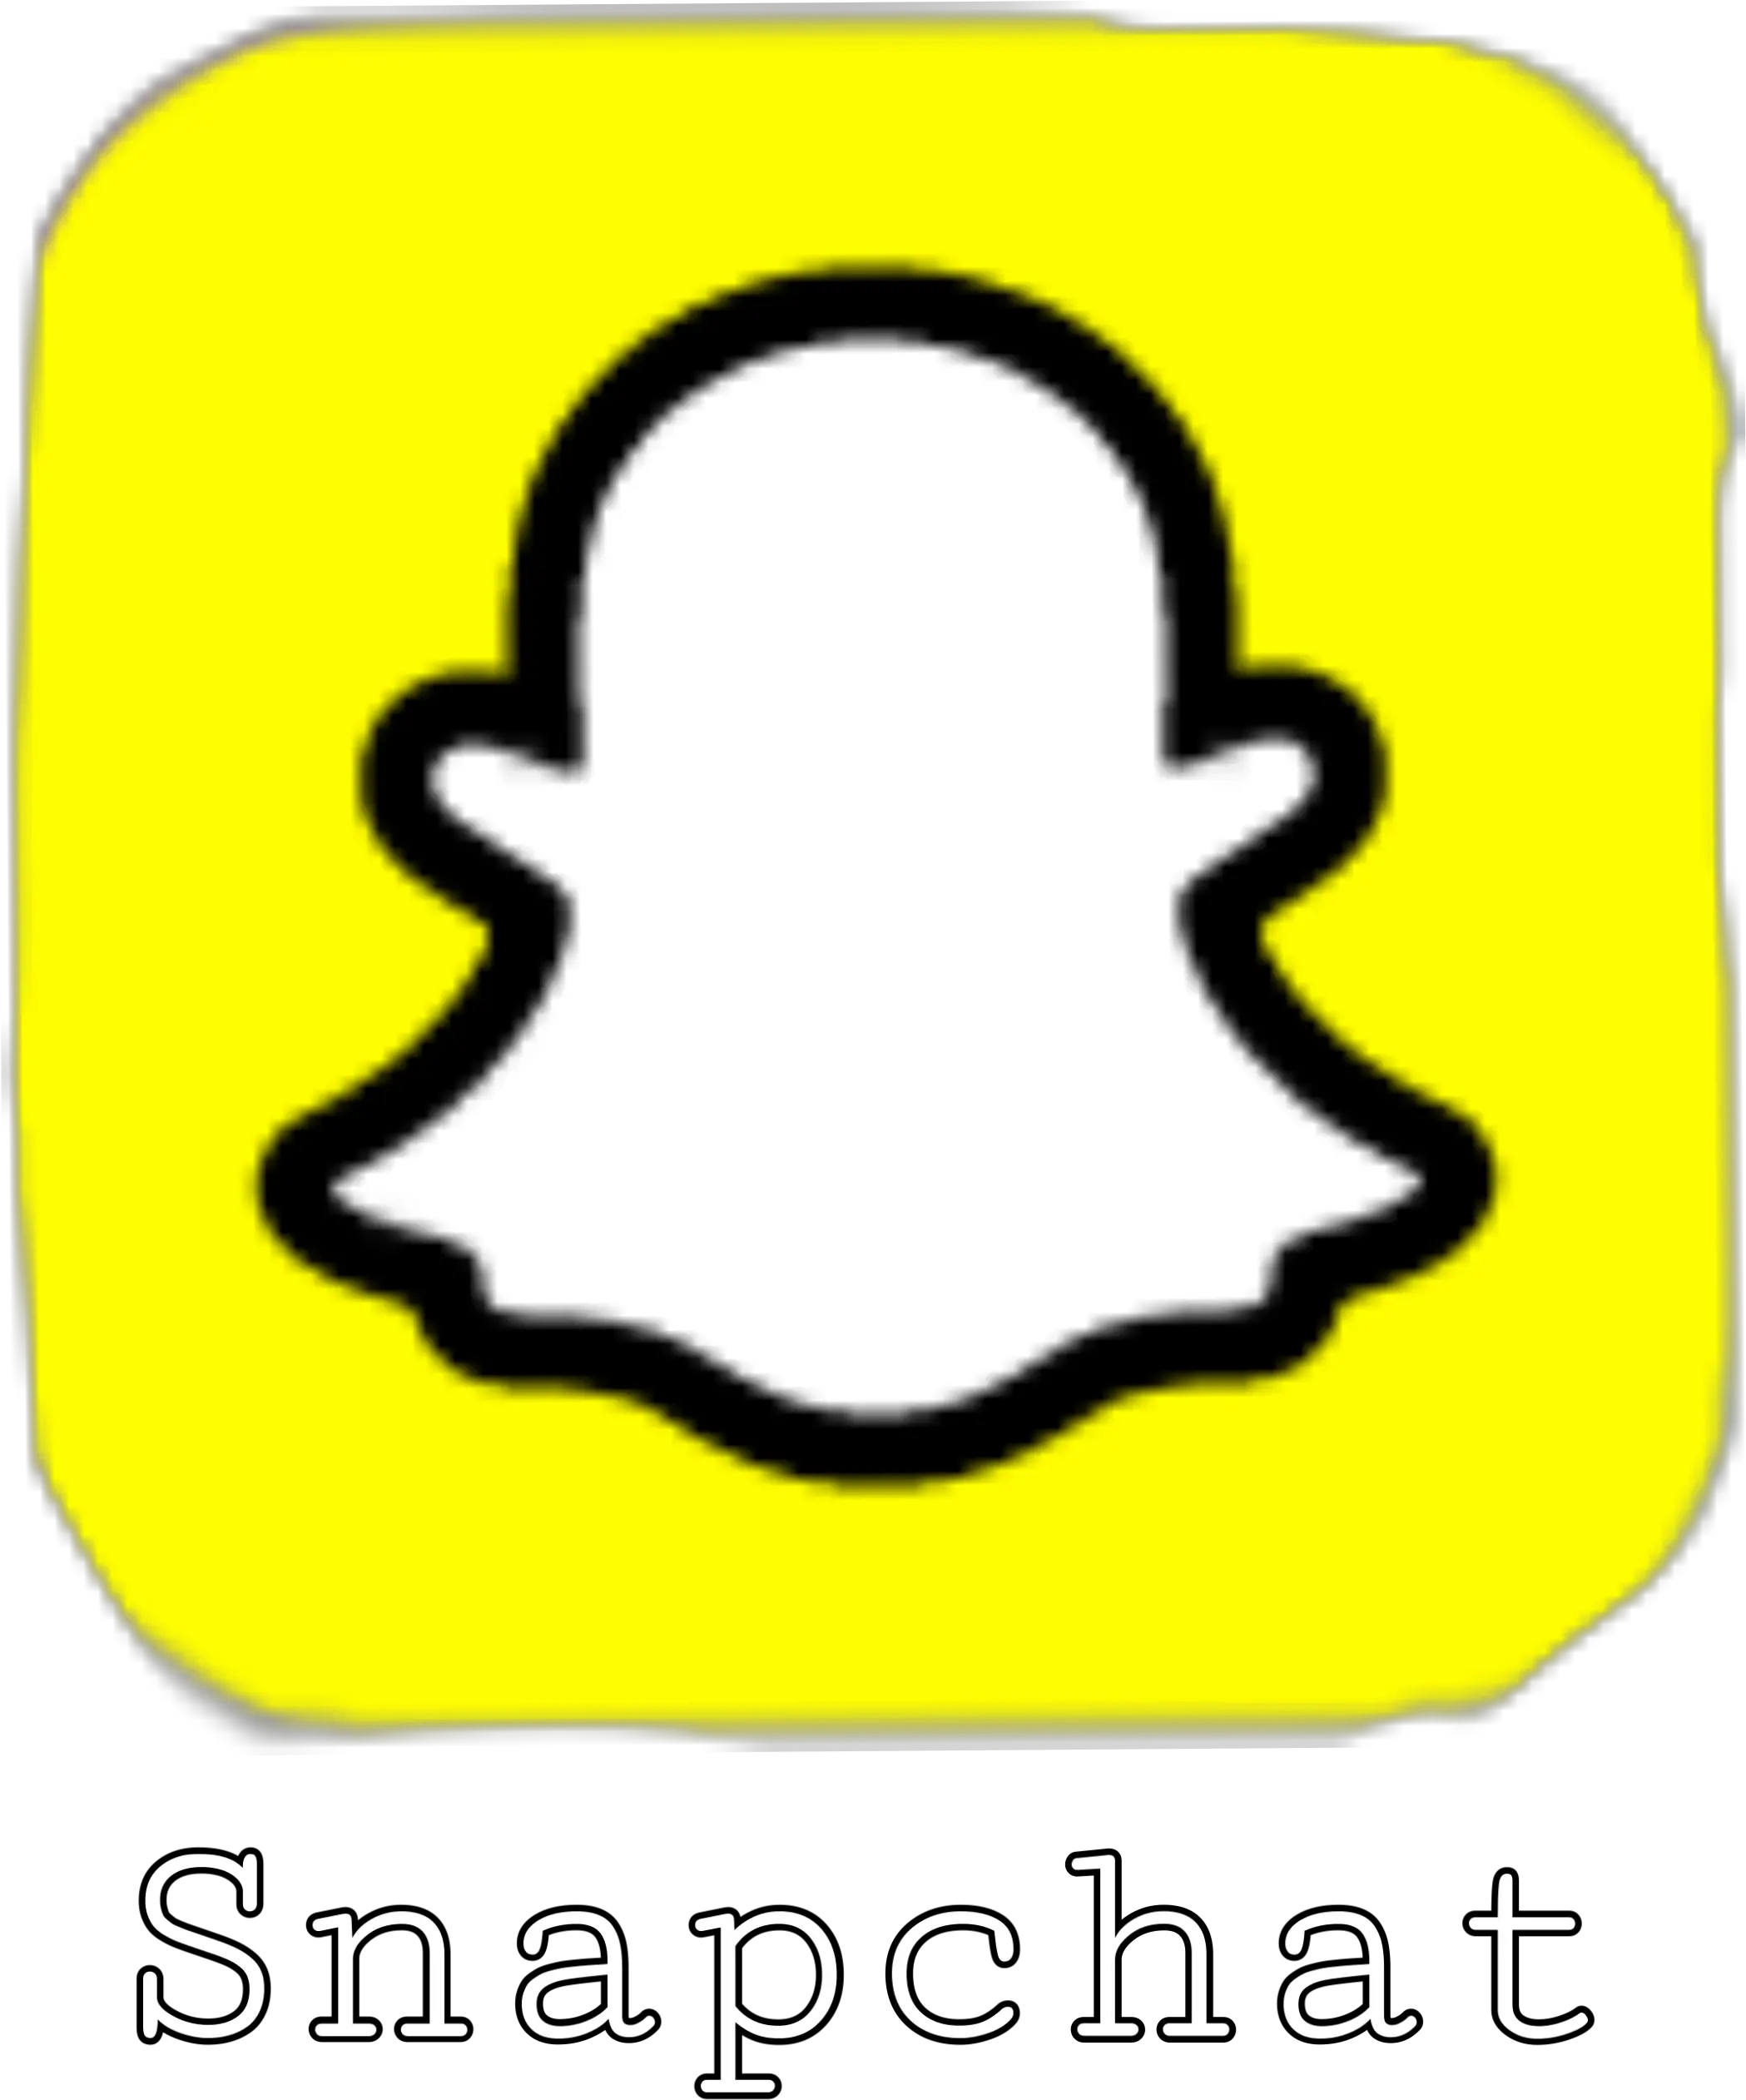 Snapchatappssnapchatrandomrandomfreetoe Snapchat Logo Png Snap Chat Logo Png